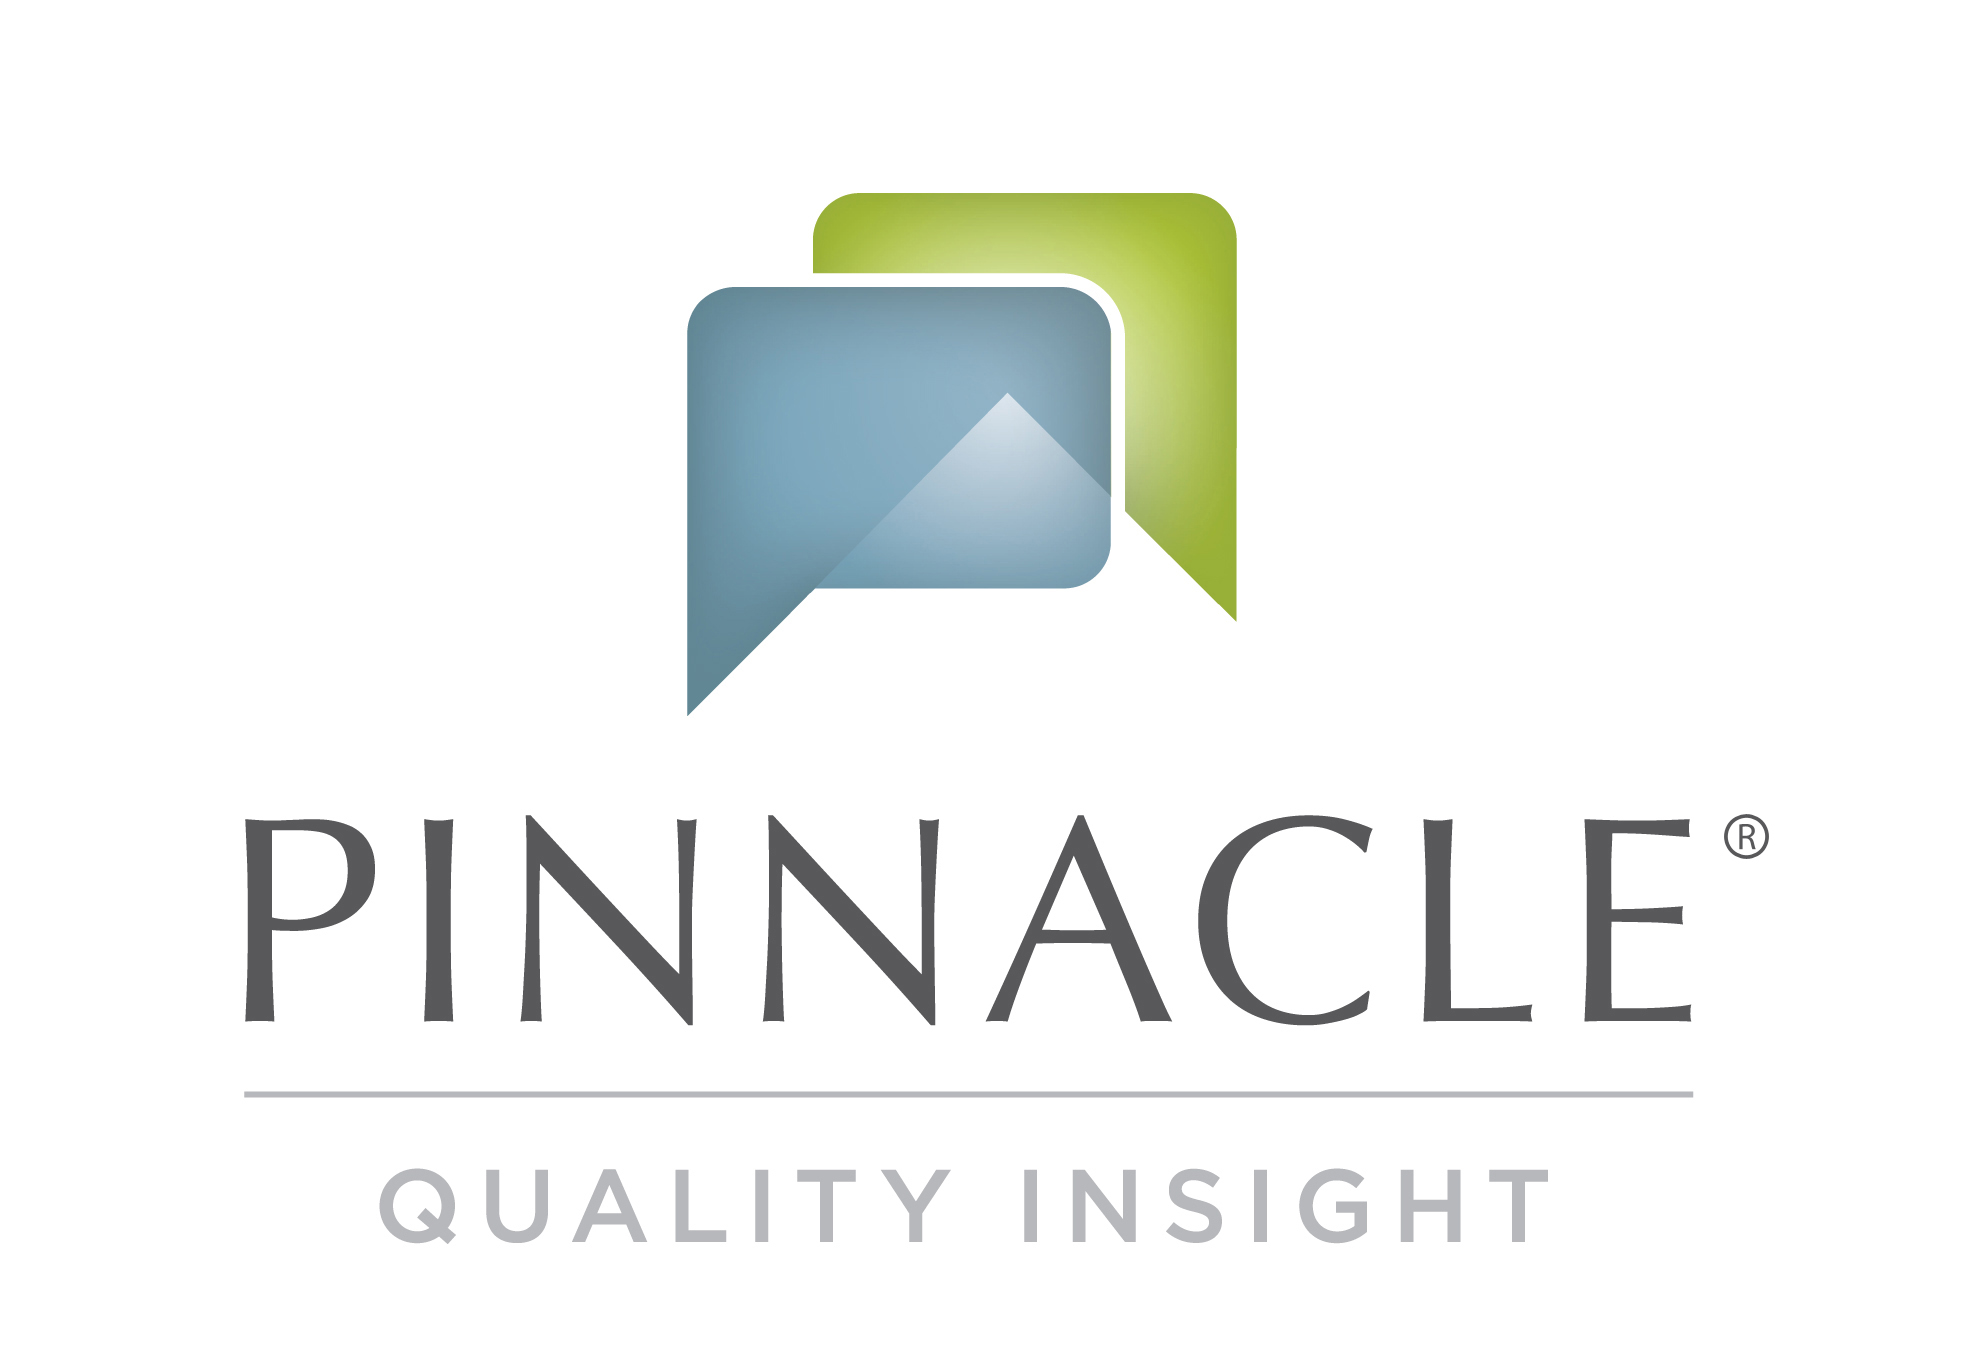 Pinnacle Quality Insight logo